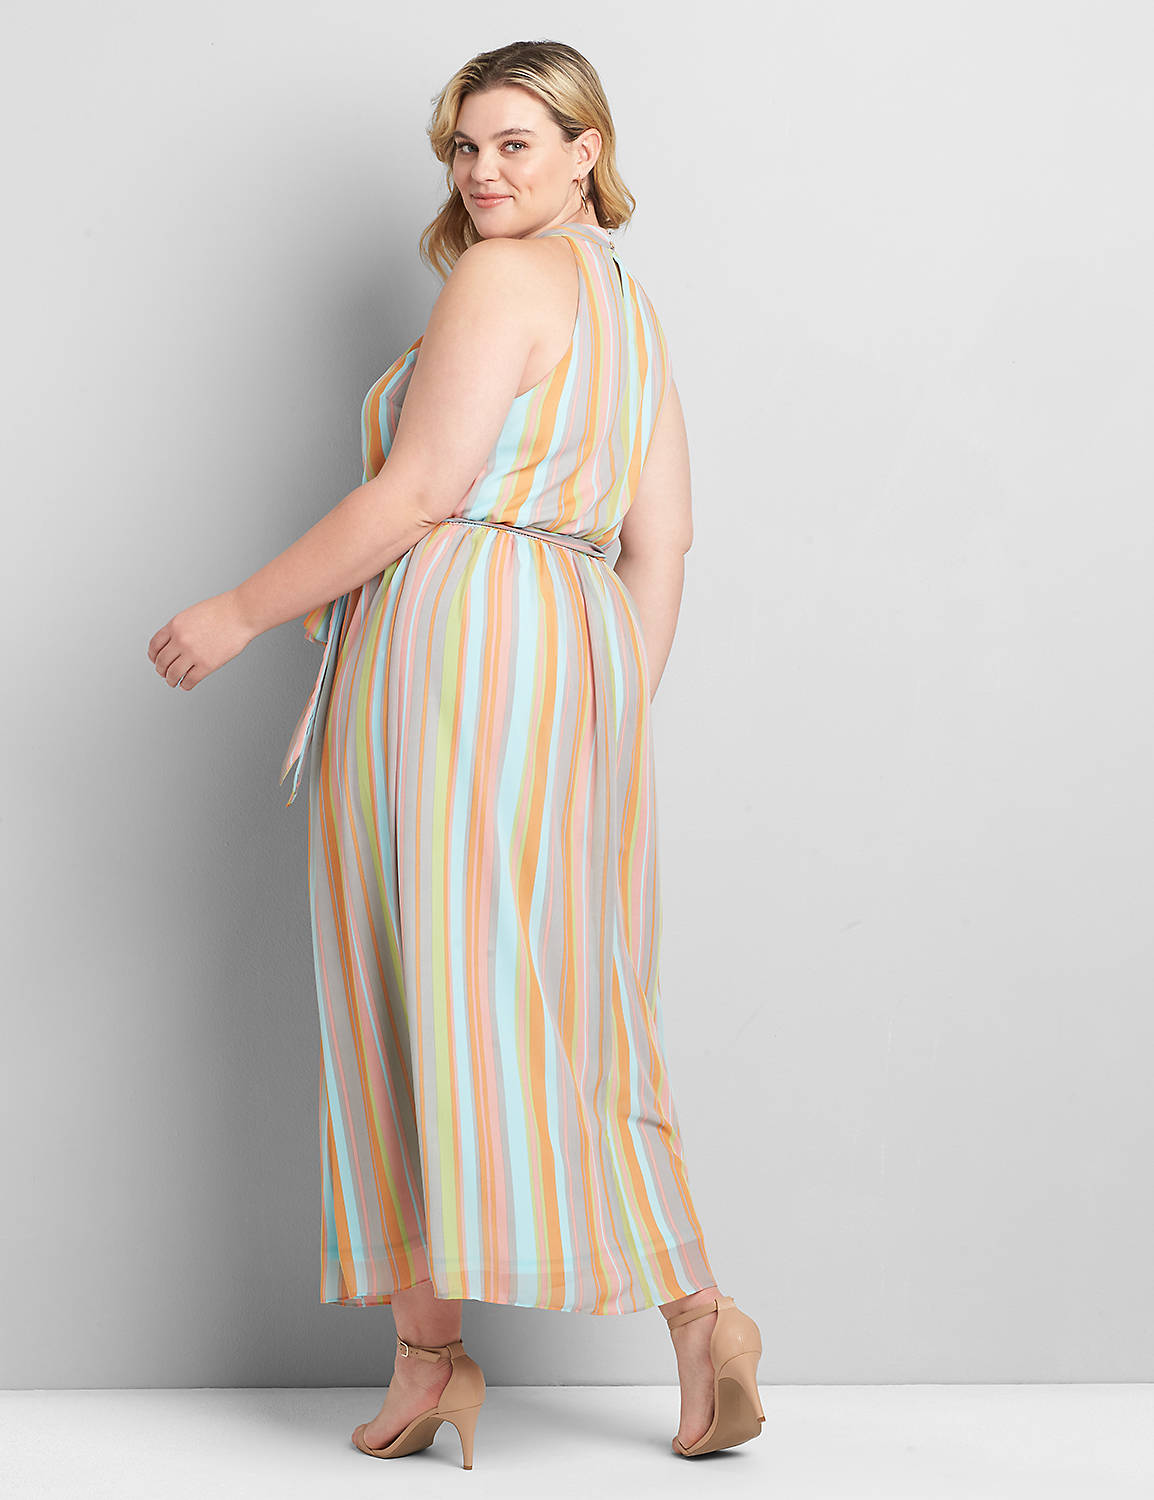 Halter Neck Striped Maxi Chiffon Dress 1119433:Stripe As Sample:24 Product Image 2